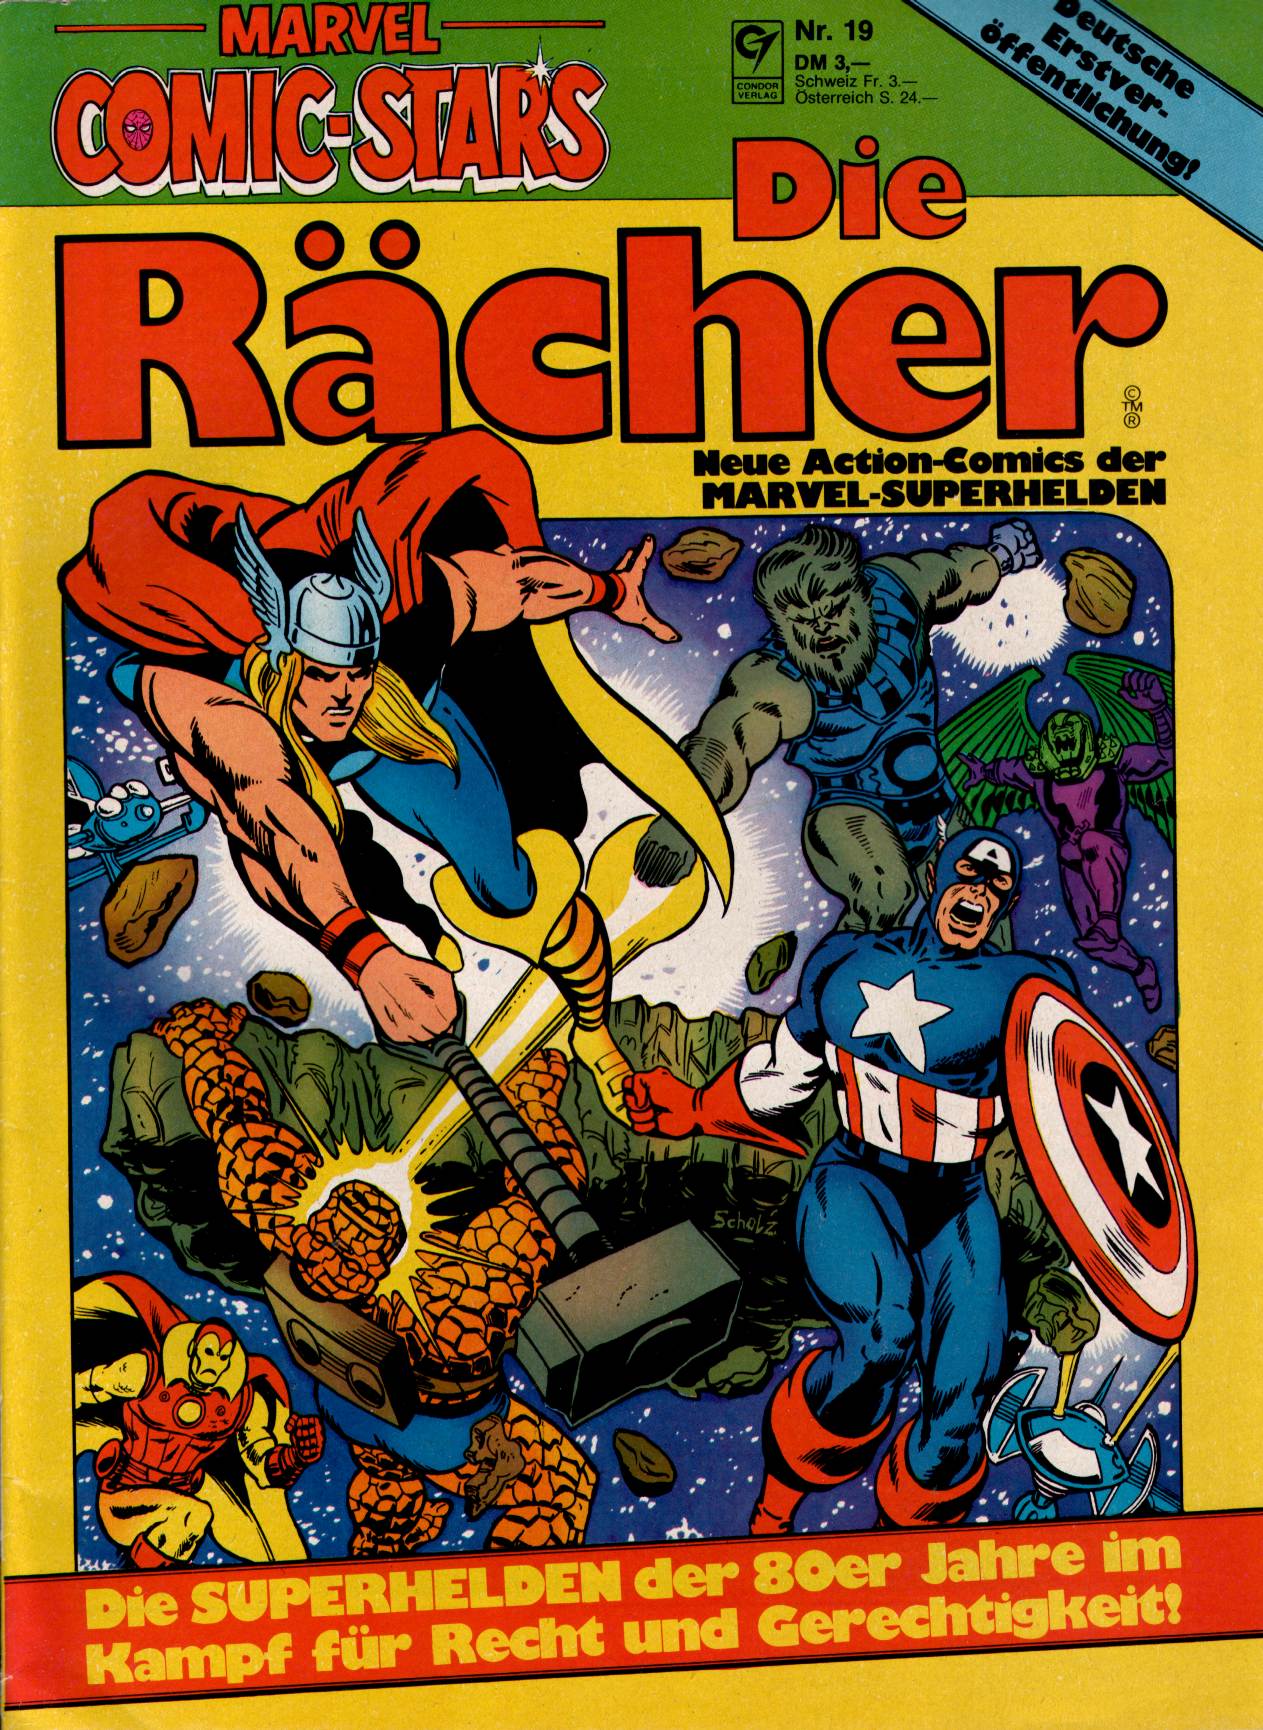 Marvel Comic Stars Condor Cover